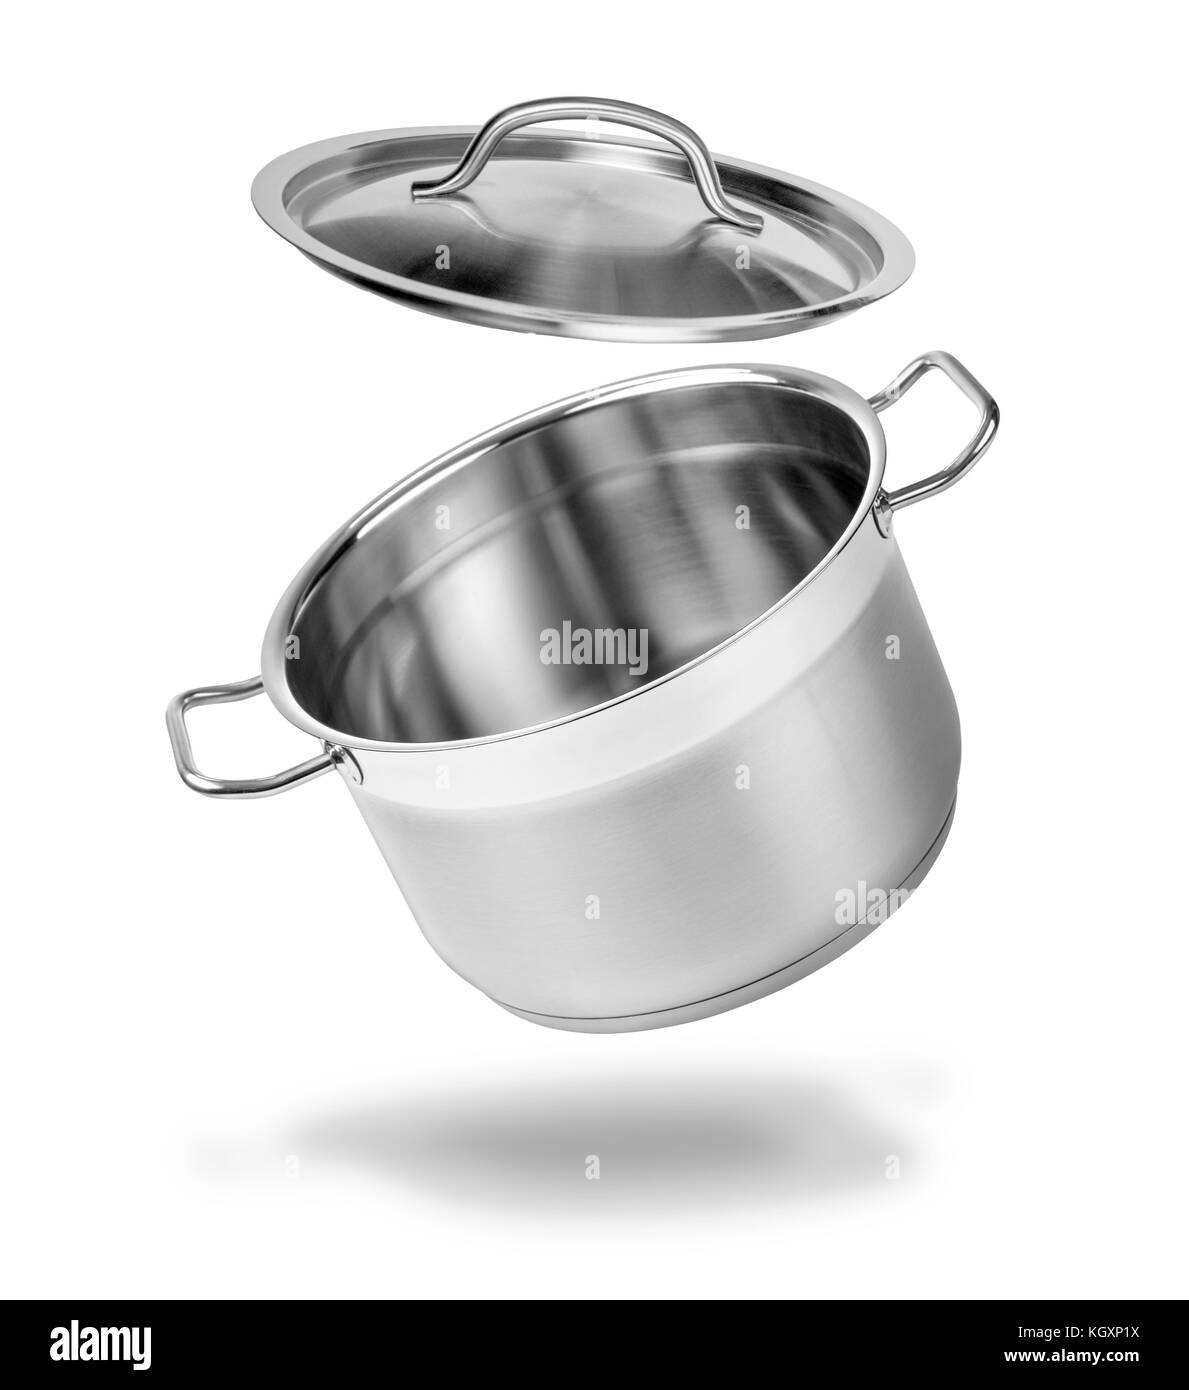 https://c8.alamy.com/comp/KGXP1X/open-kitchen-pot-with-lid-isolated-on-white-KGXP1X.jpg